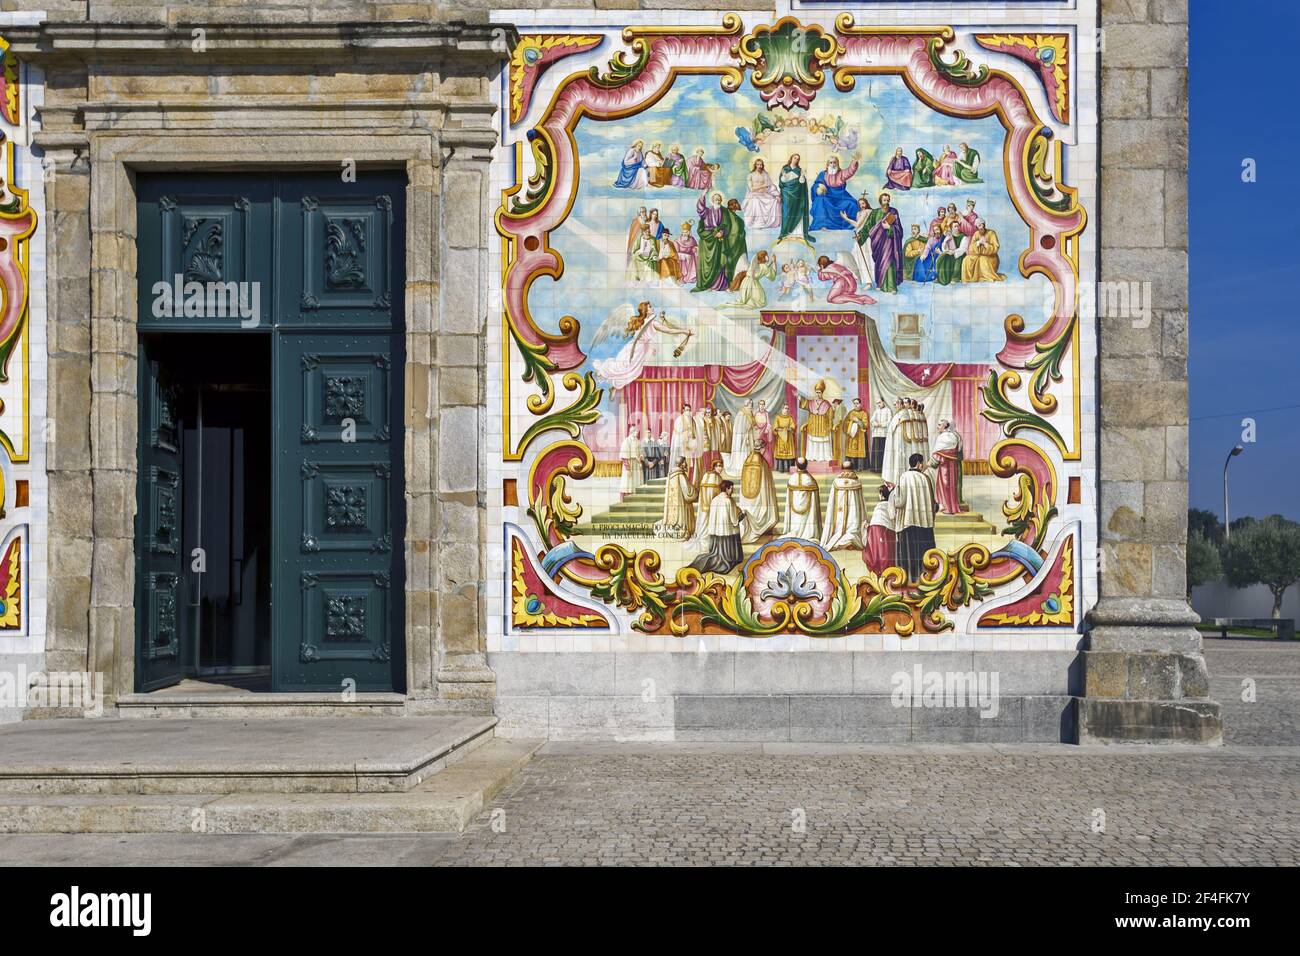 facade covered with azulejos of the Nossa Senhora do Amparo Church located in Valega, district of Aveiro, Portugal Stock Photo